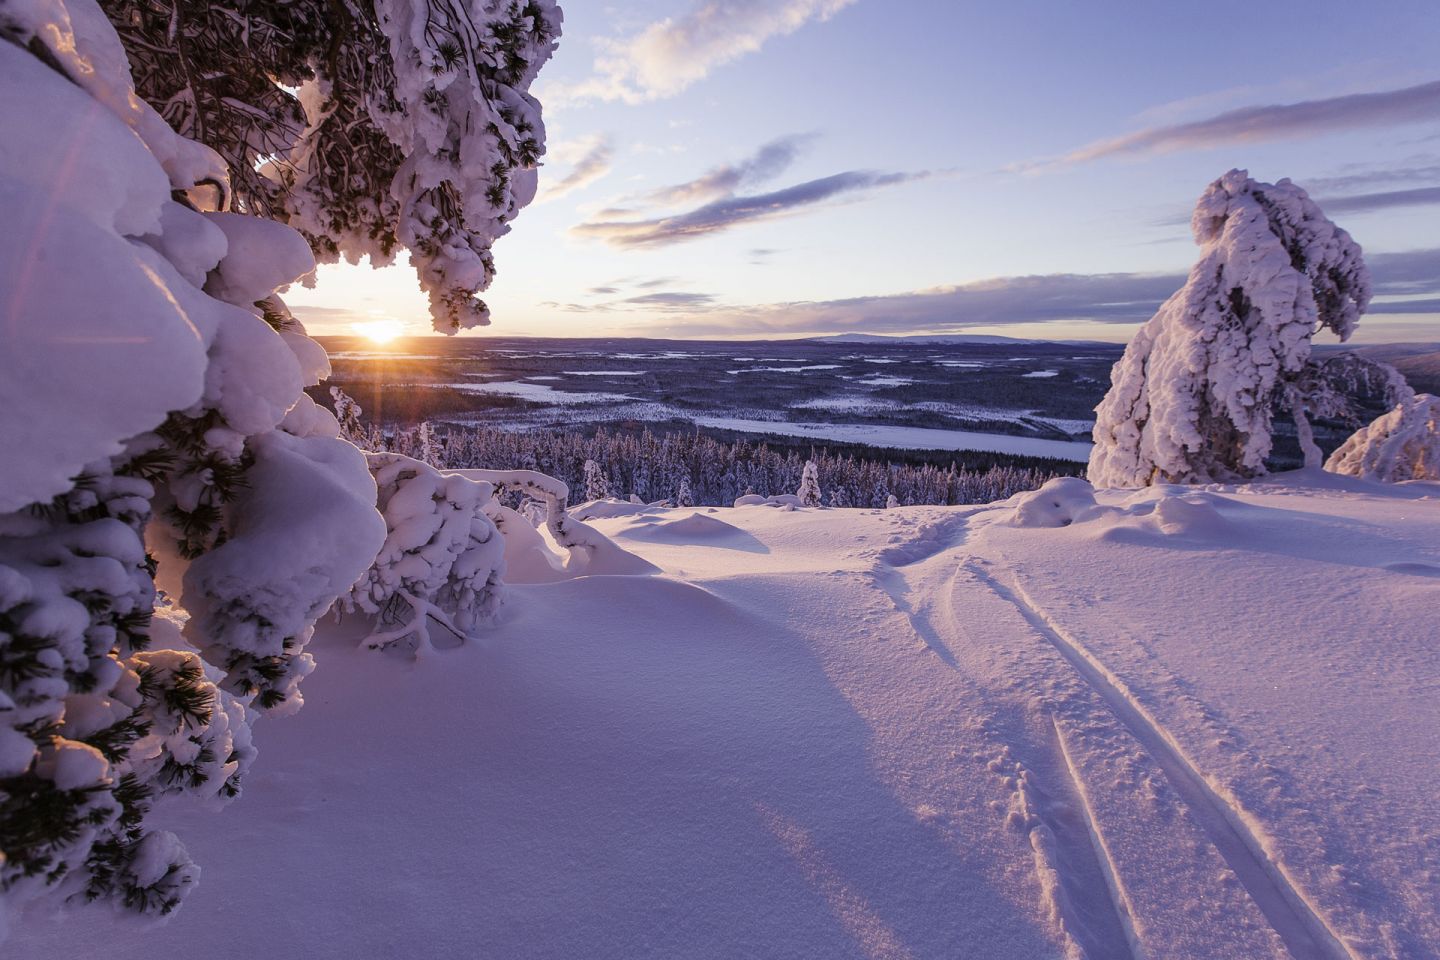 Levi ski resort in Kittilä, Finland